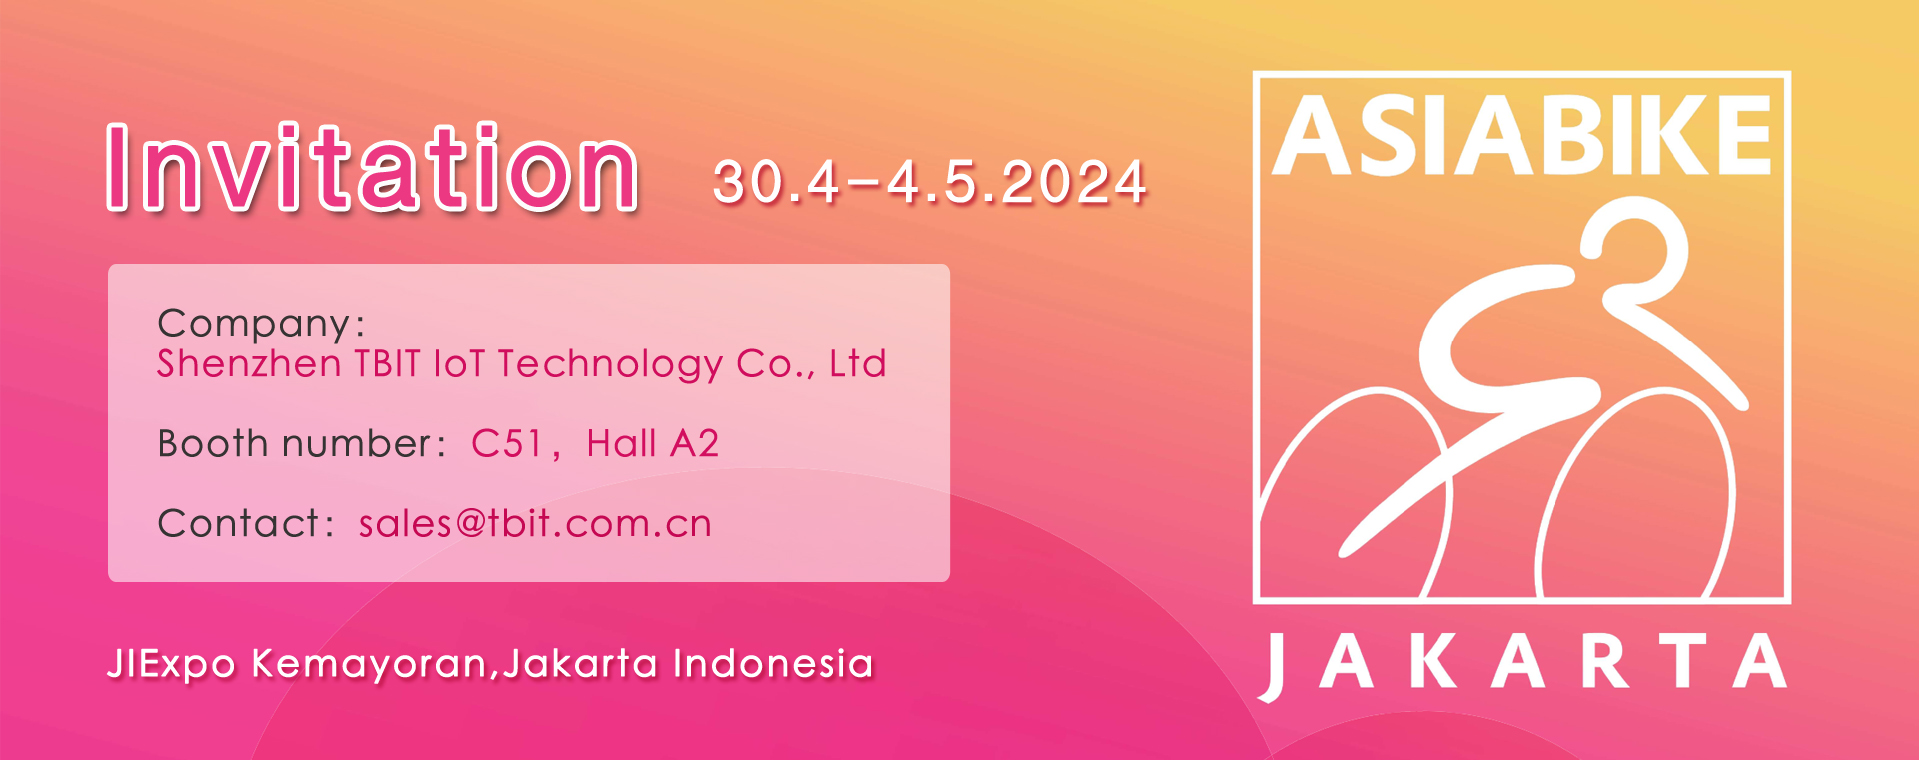 AsiaBike Jakarta 2024